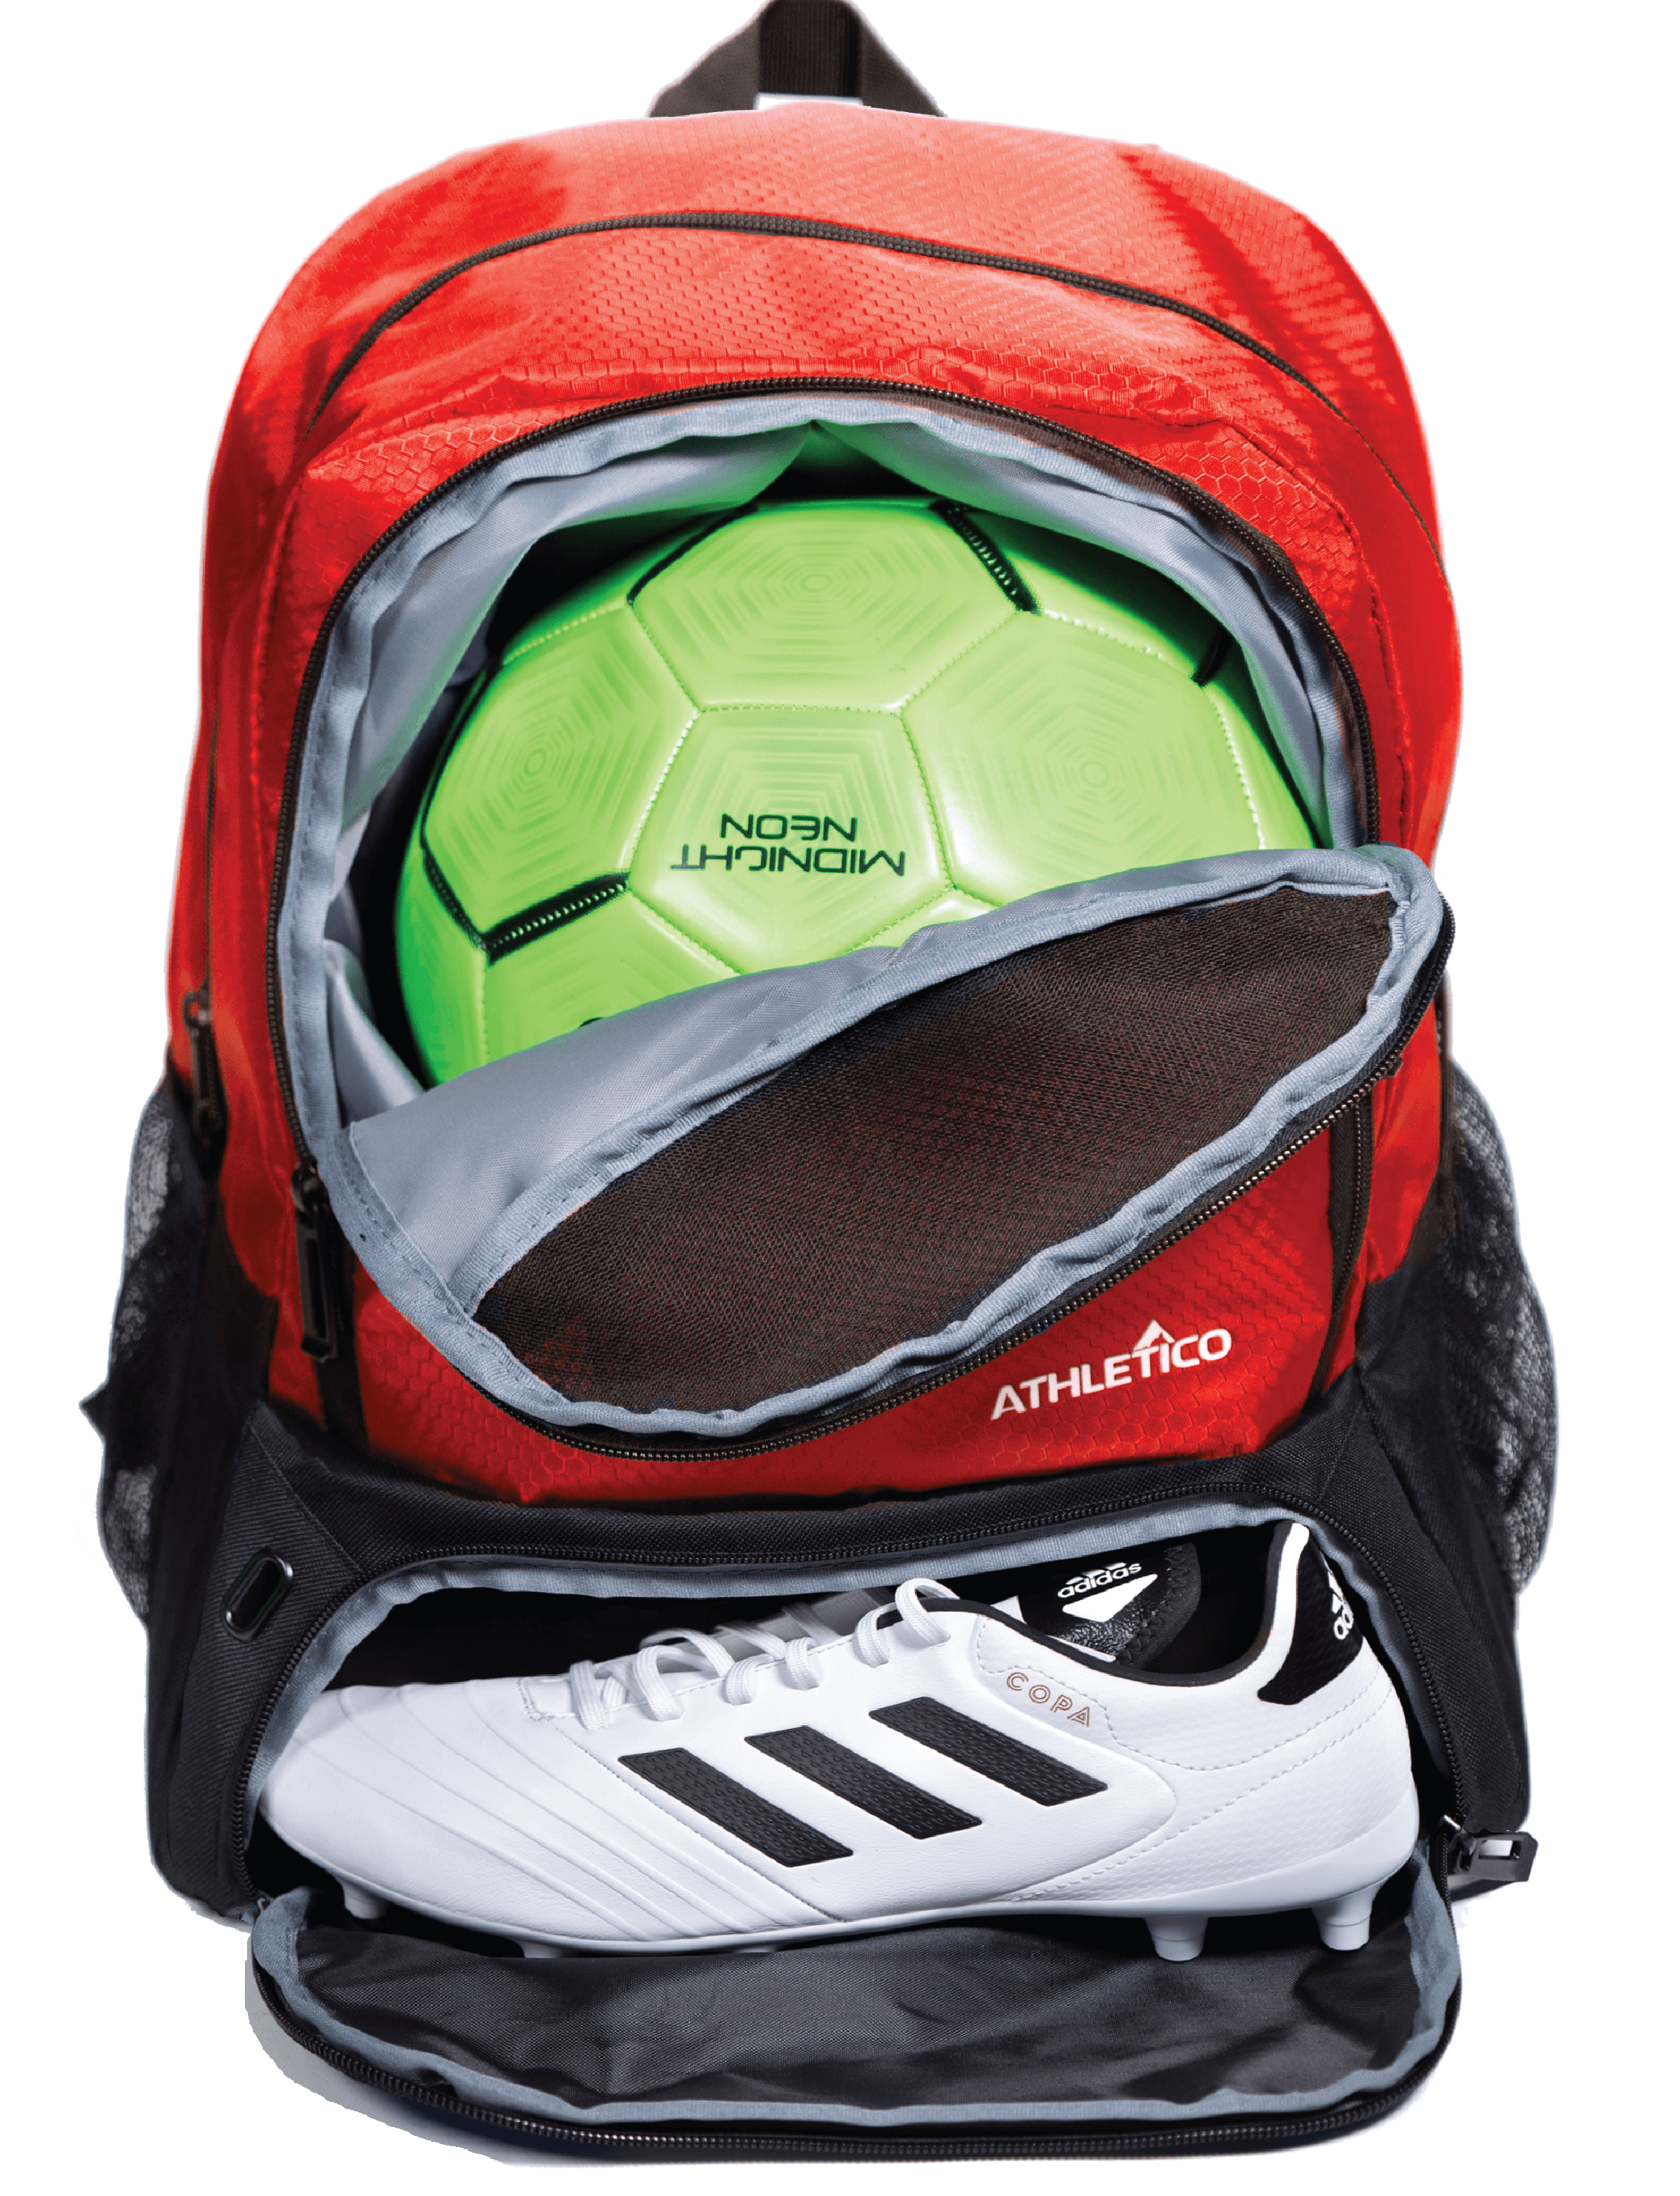  LARIPOP Boys Soccer Bag - Soccer Backpack, Colorful